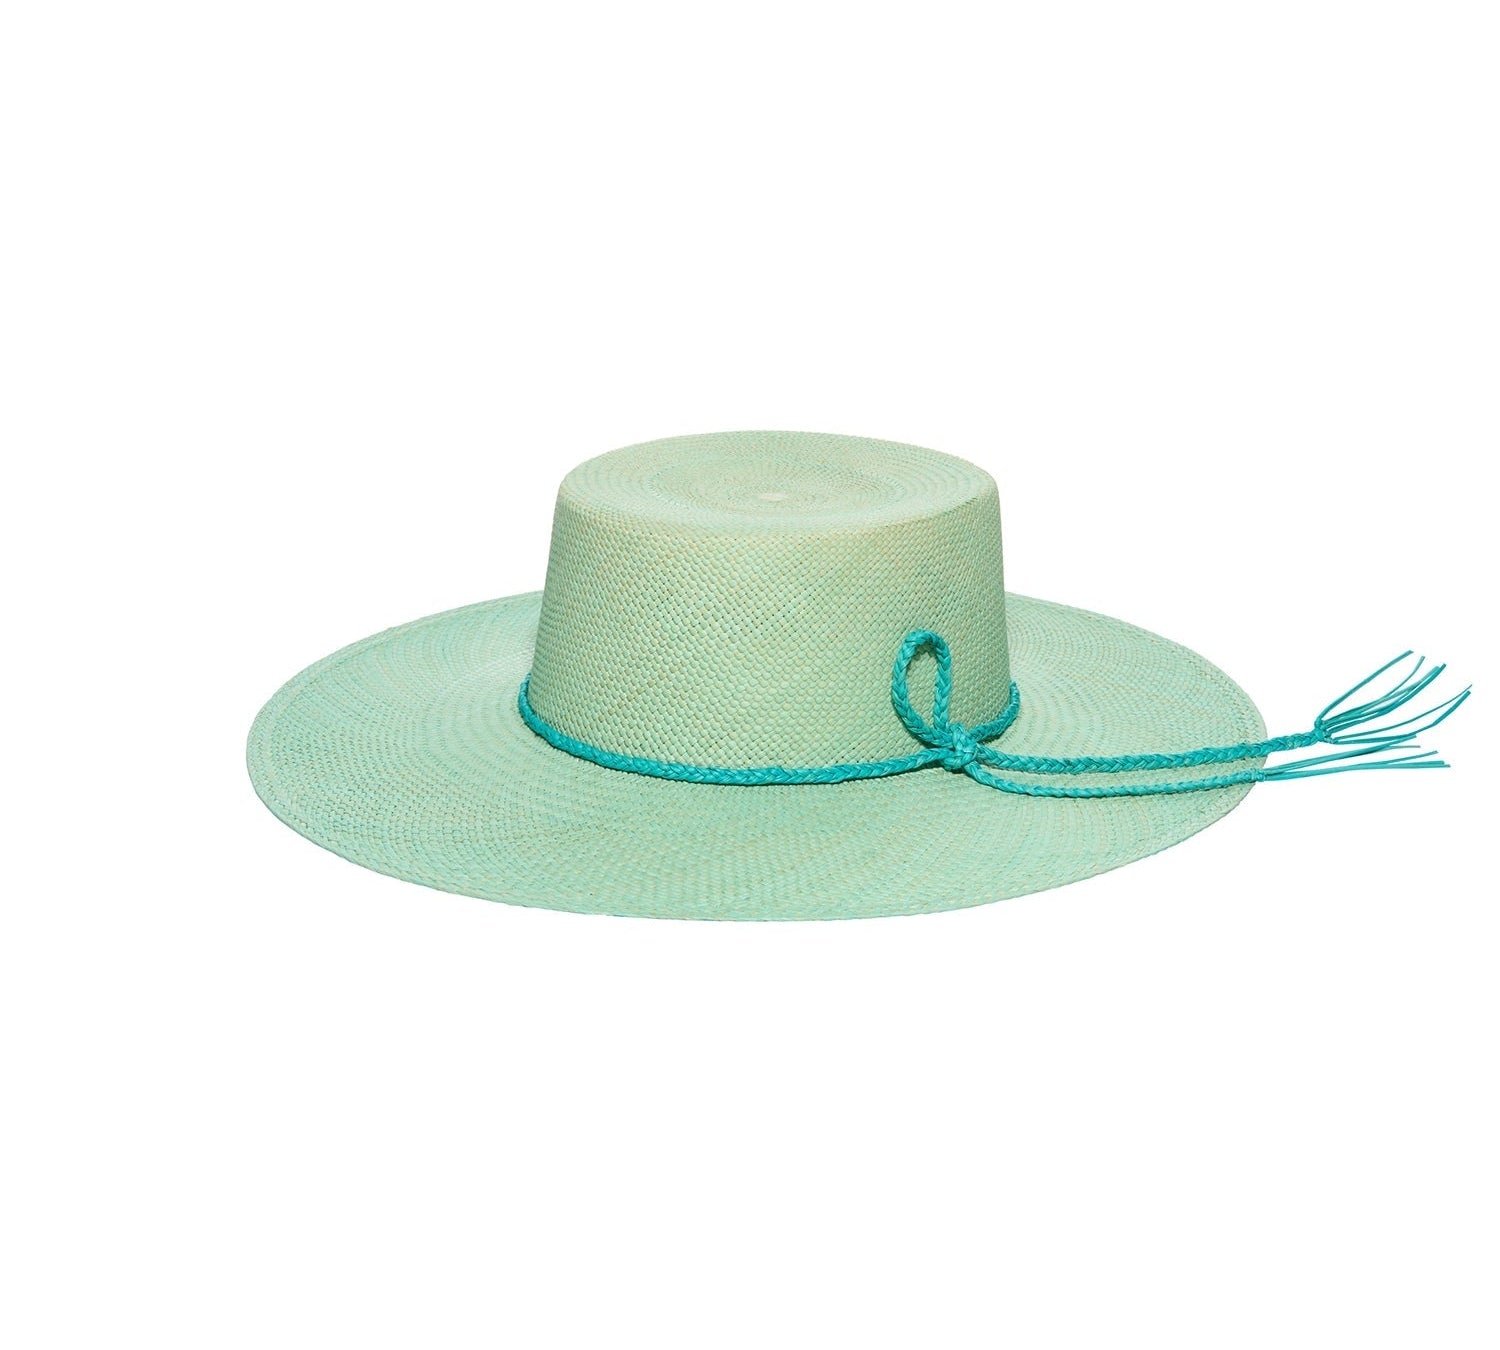 Annecy - Wide Brim SALE Hat artesano